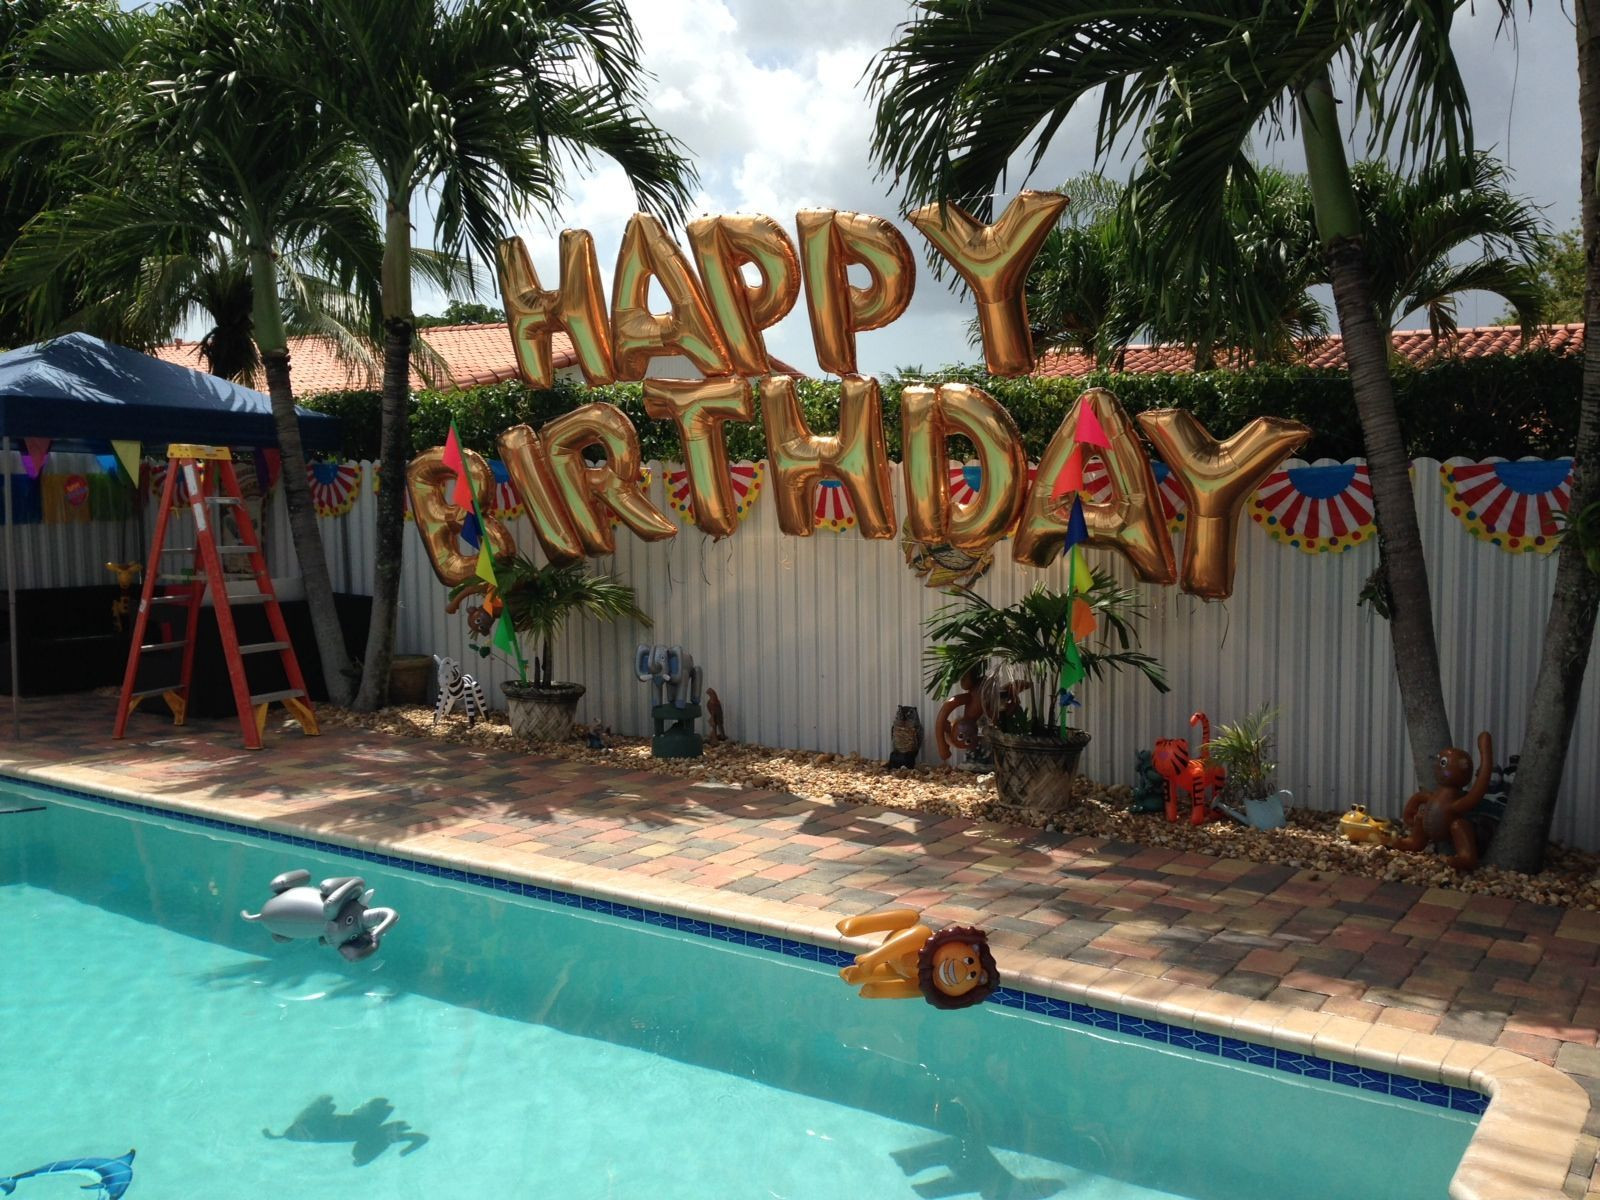 Swim Pool Party Ideas
 Pin by Lizbeth Burrell on Greyson s 5th birthday ideas in